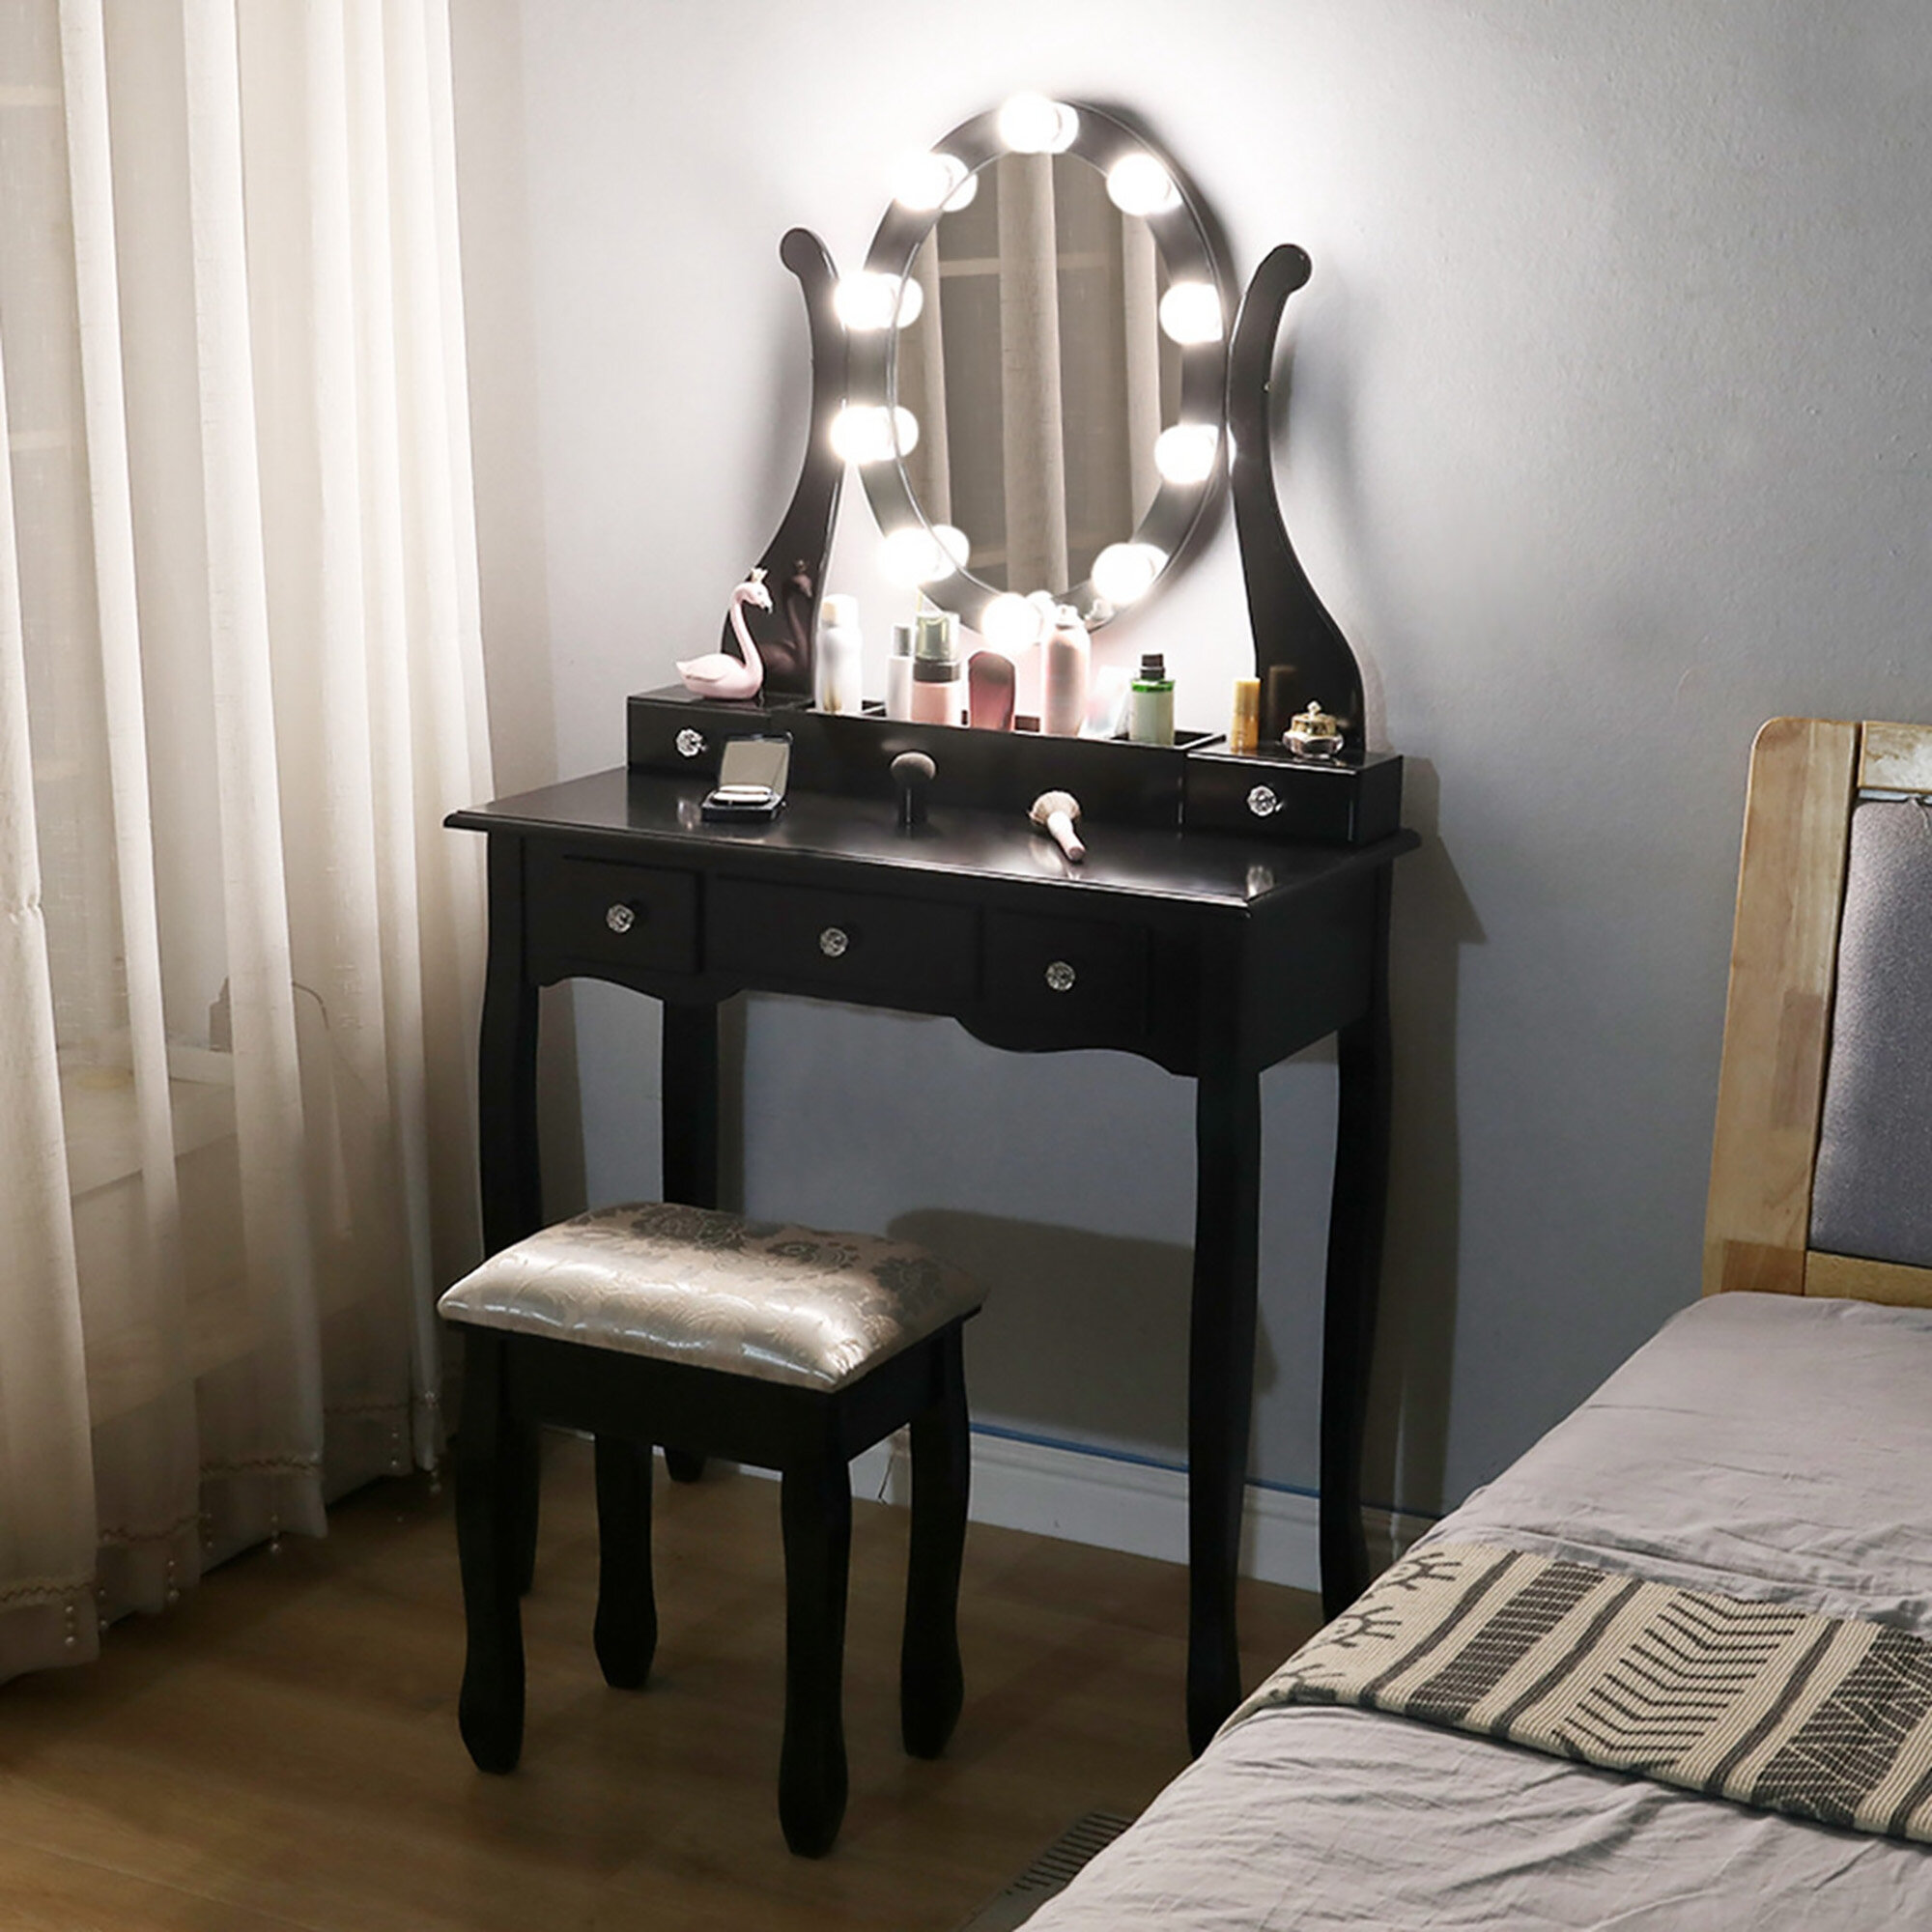 Details about   Makeup Dressing Table Vanity Set With Mirror 12 Led Lights for Bedroom Black 